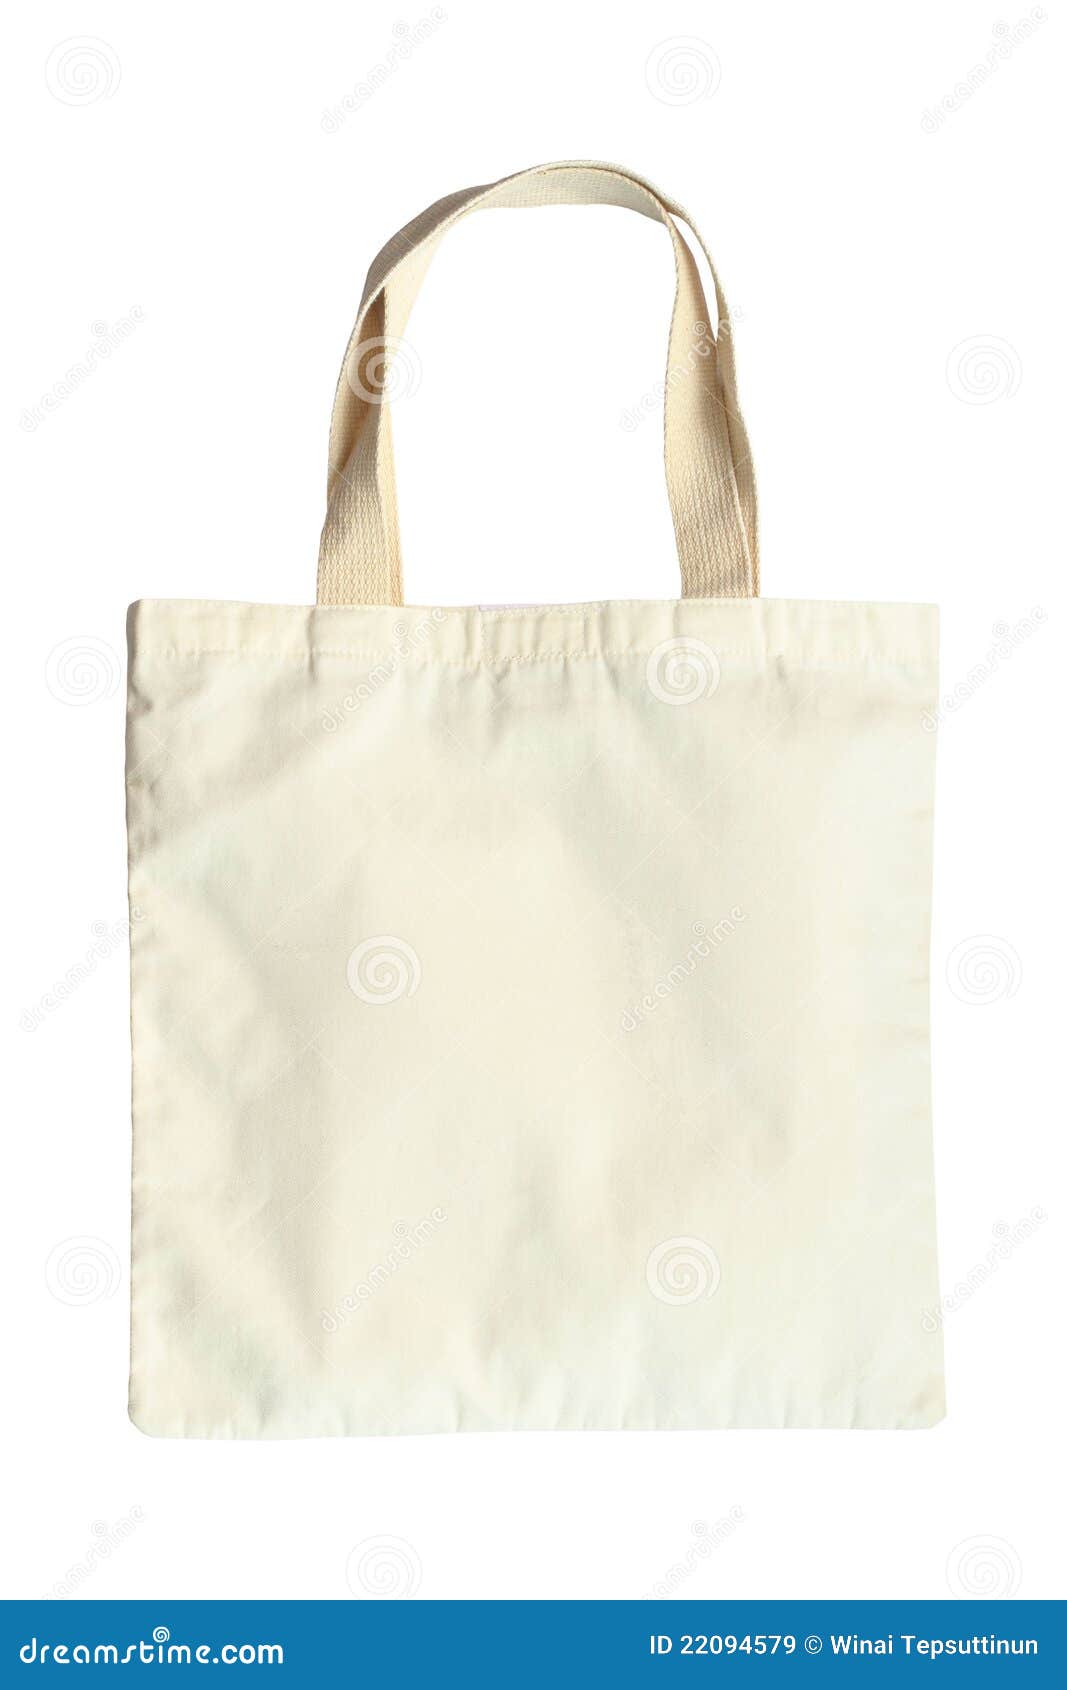 Fabric Bag On White Background Royalty Free Stock Images - Image: 22094579